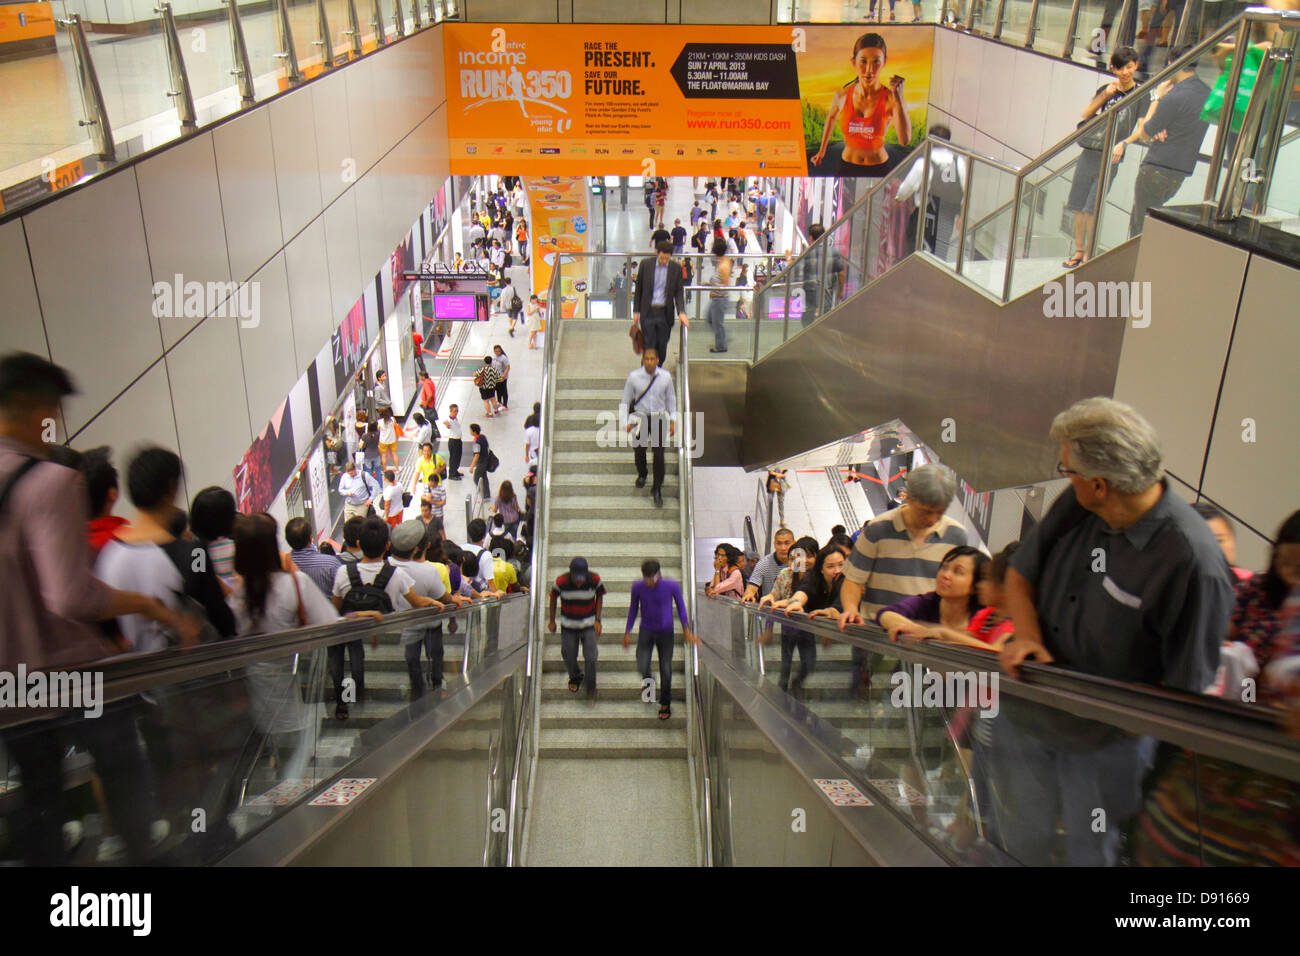 Singapore,Dhoby Ghaut MRT Station,subway train,public transportation,escalator,commuters,riders,Asian Asians ethnic immigrant immigrants minority,adul Stock Photo